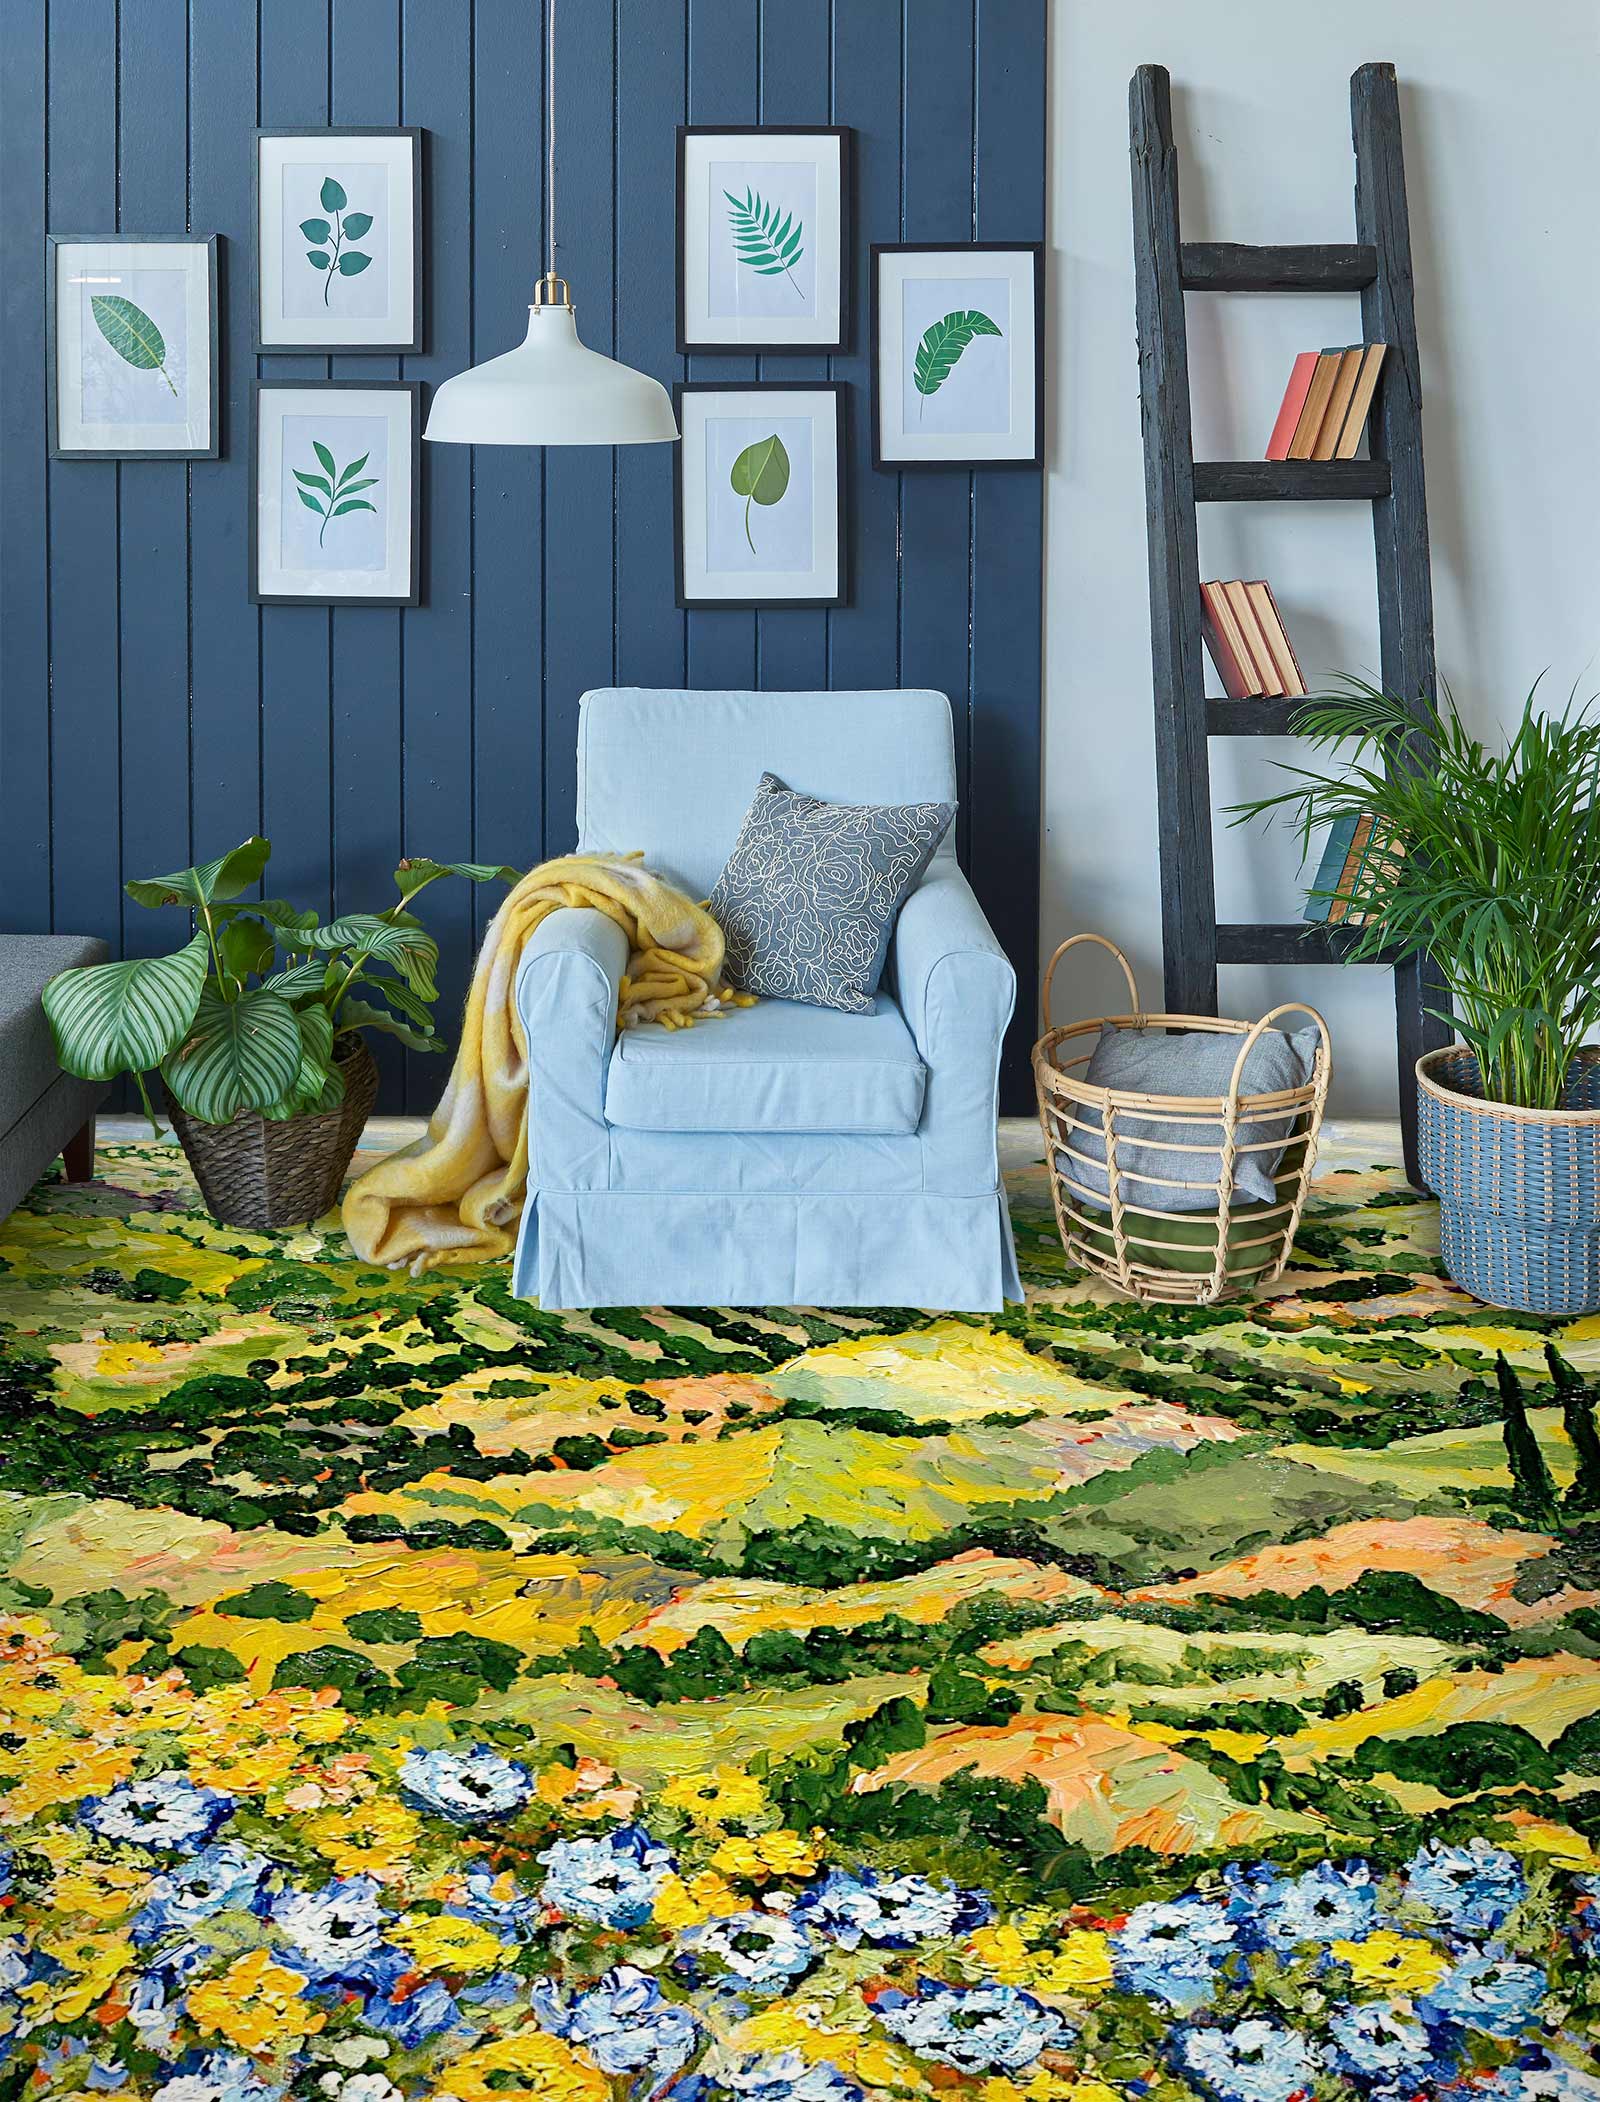 3D Flower Hillside Meadow Painting 9531 Allan P. Friedlander Floor Mural